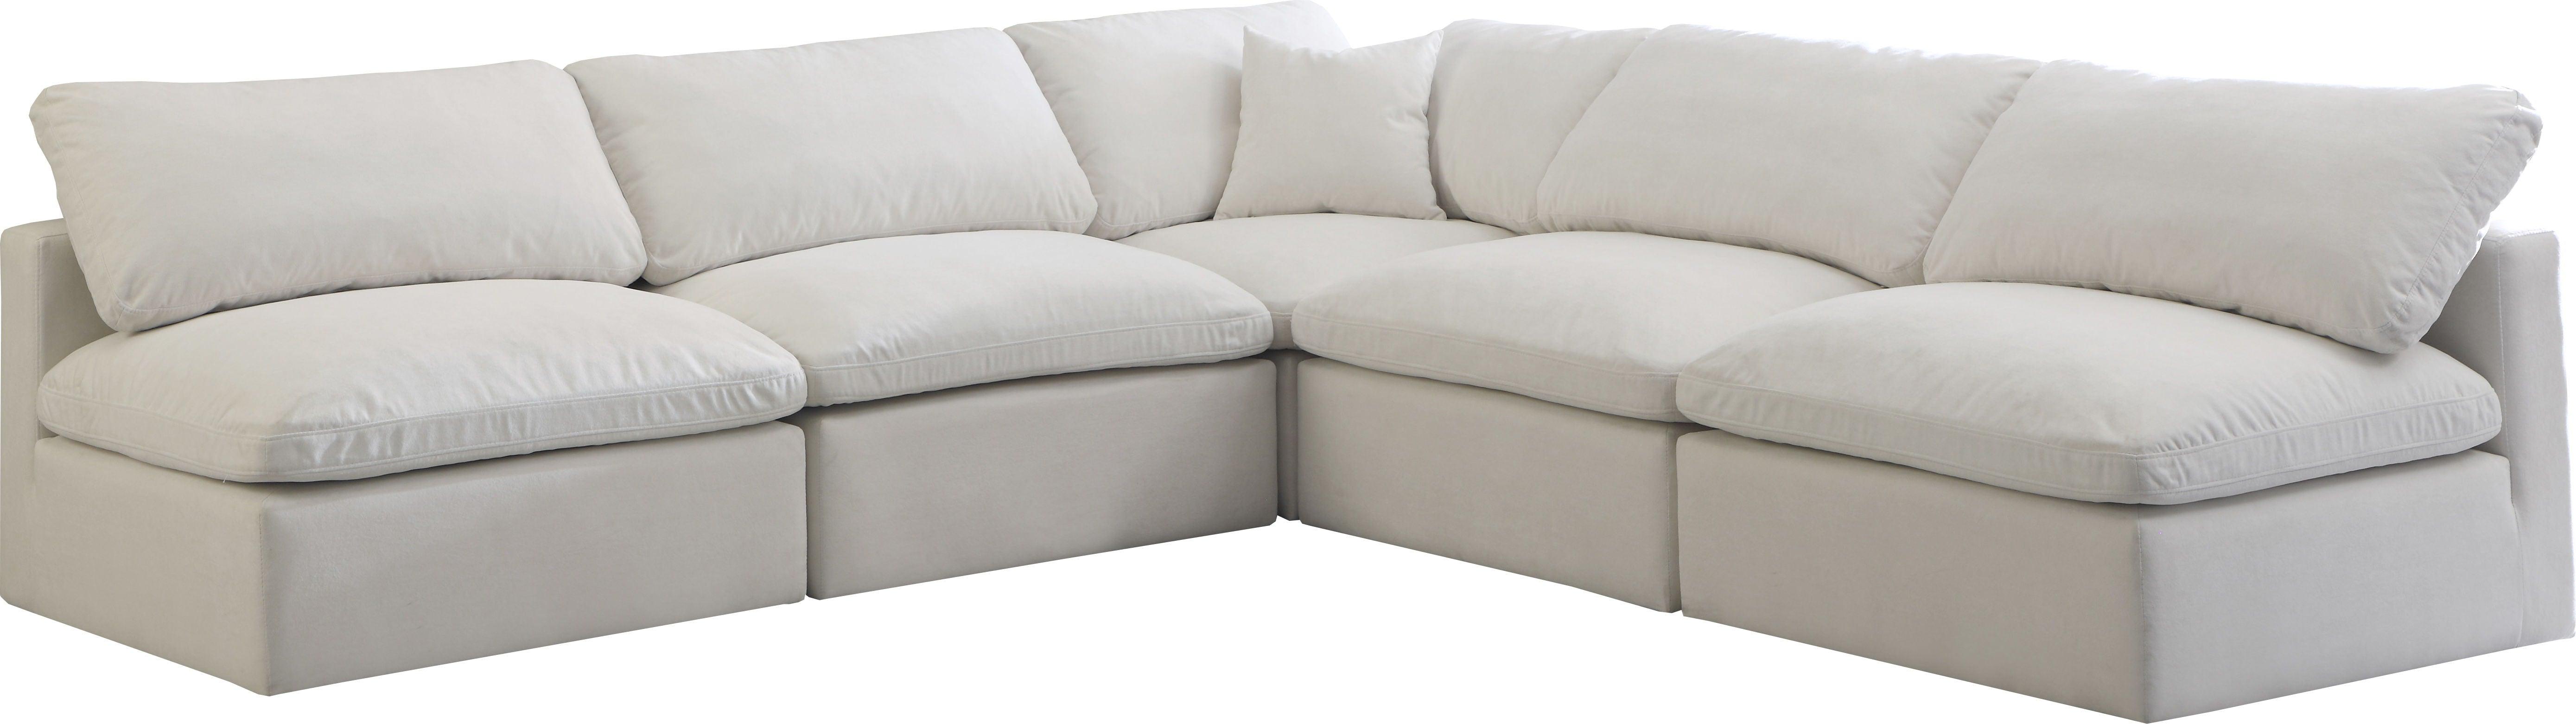 Meridian Furniture - Plush - Velvet Standart Comfort 5 Piece Modular Sectional - Cream - Fabric - 5th Avenue Furniture